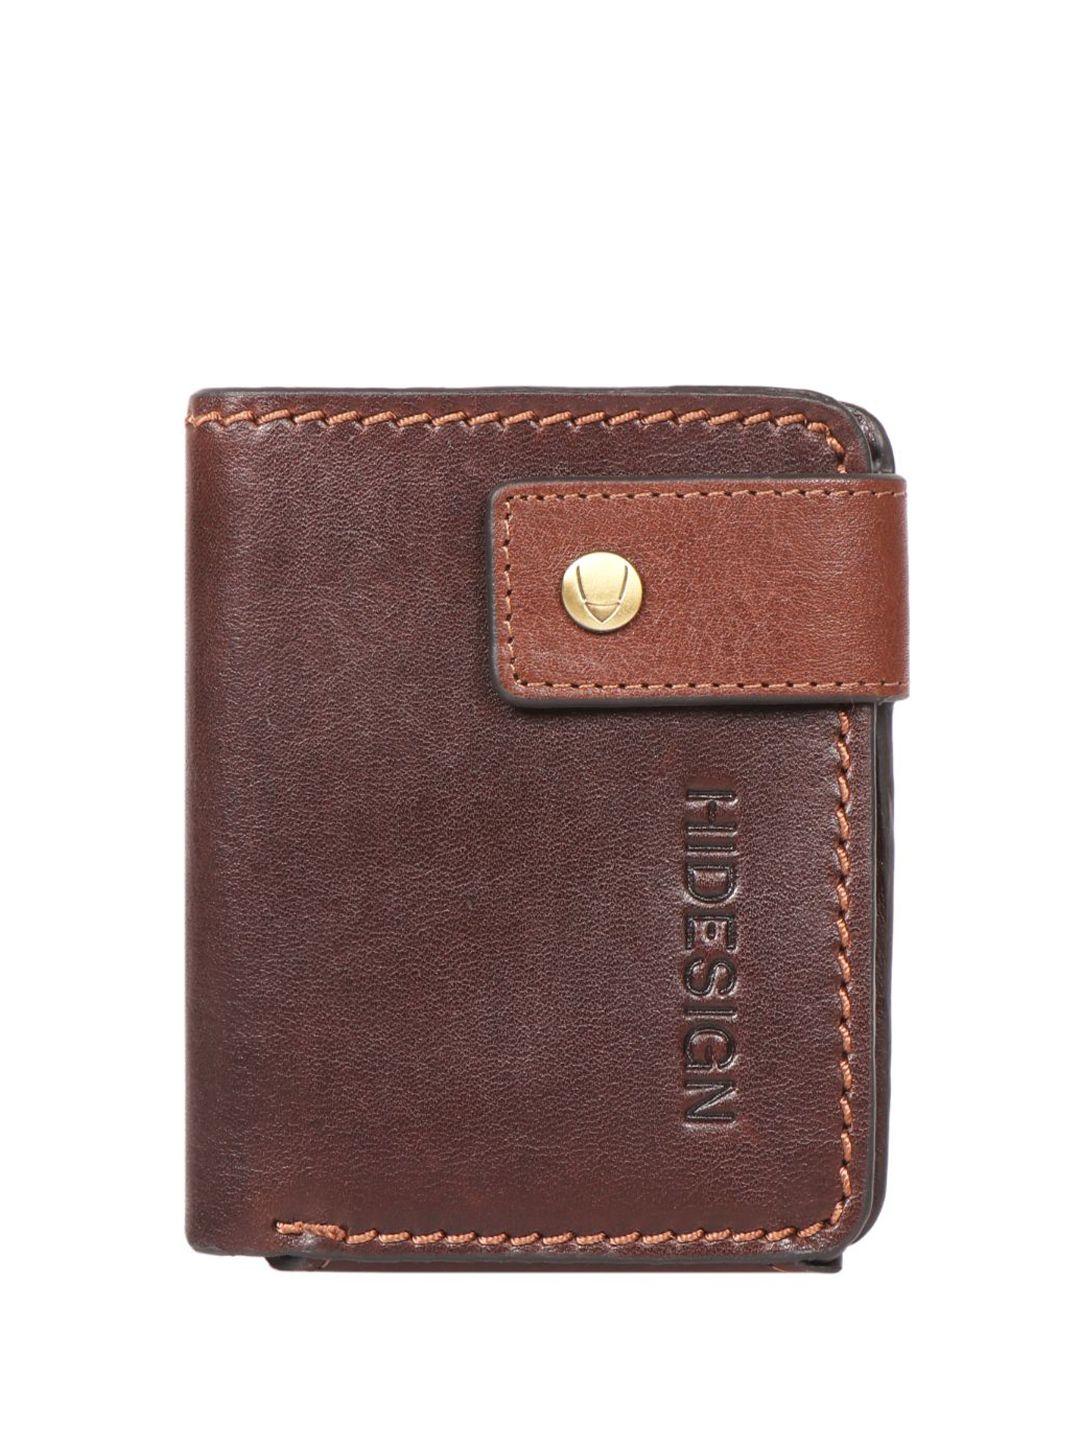 hidesign men leather three fold wallet